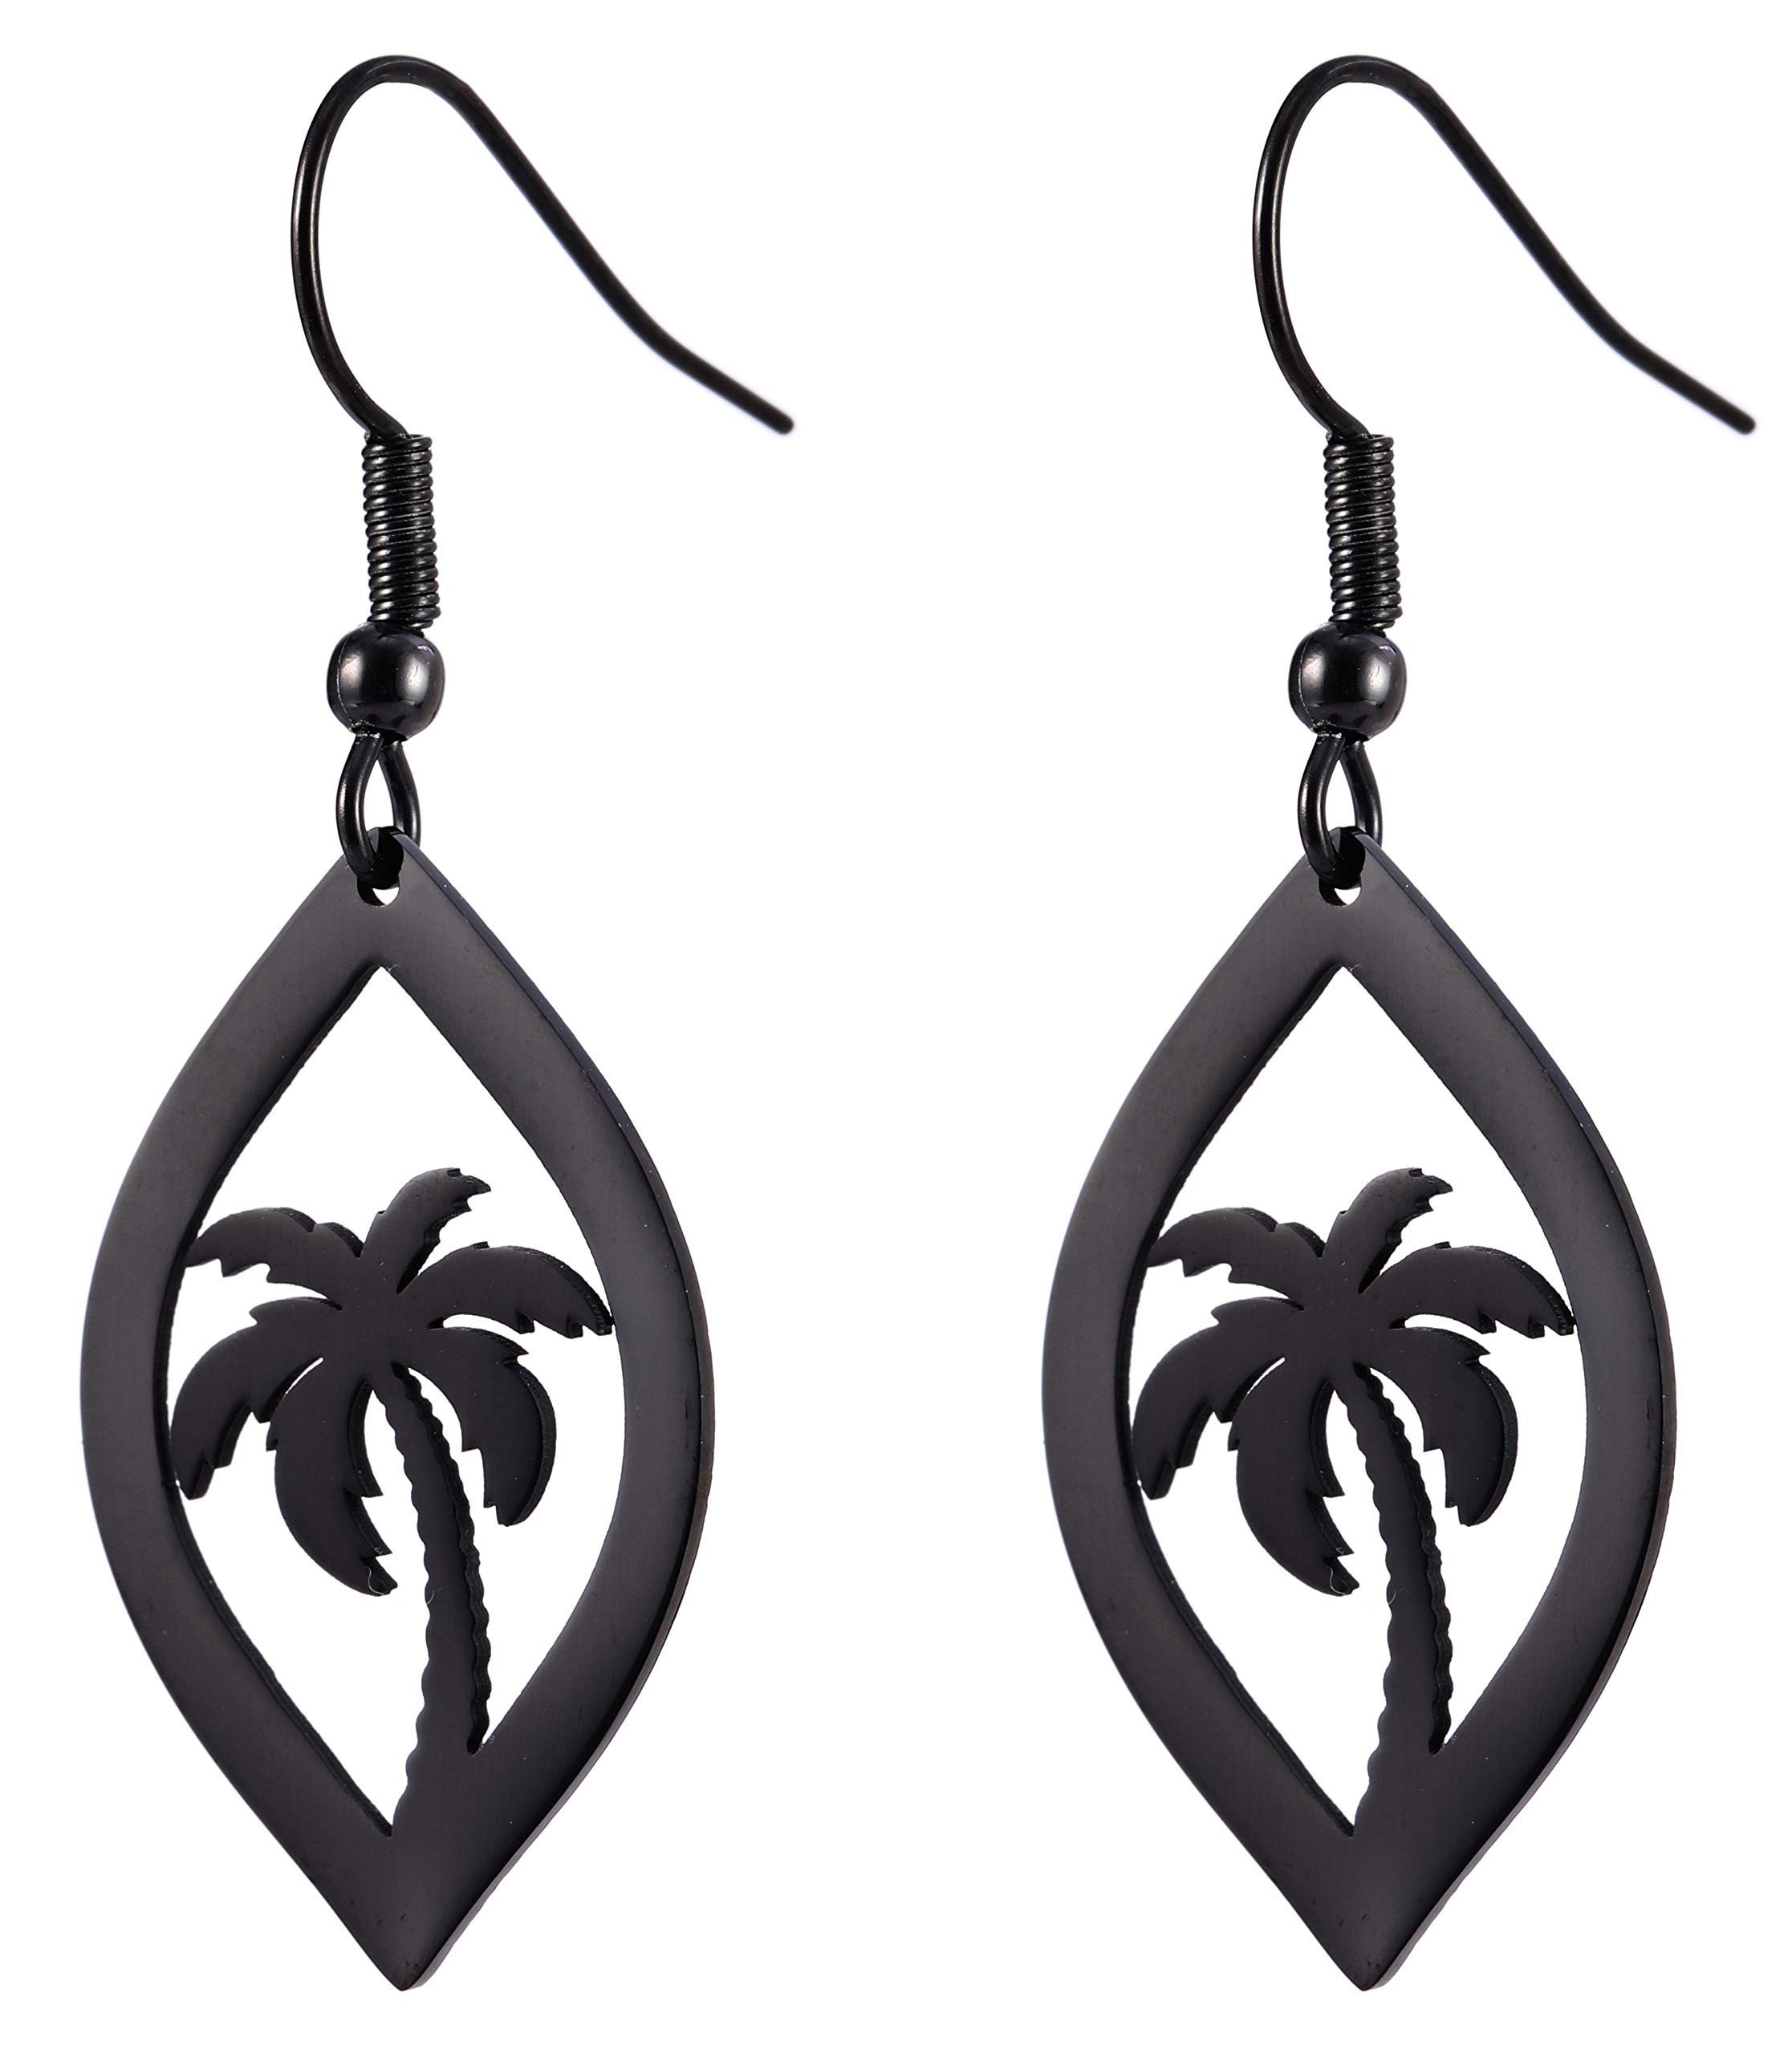 TEAMER Fashion Silver Stainless Steel Earrings Coconut Palm Tree Summer Beach Dangle Earrings Hollow Out Jewelry for Women Girls